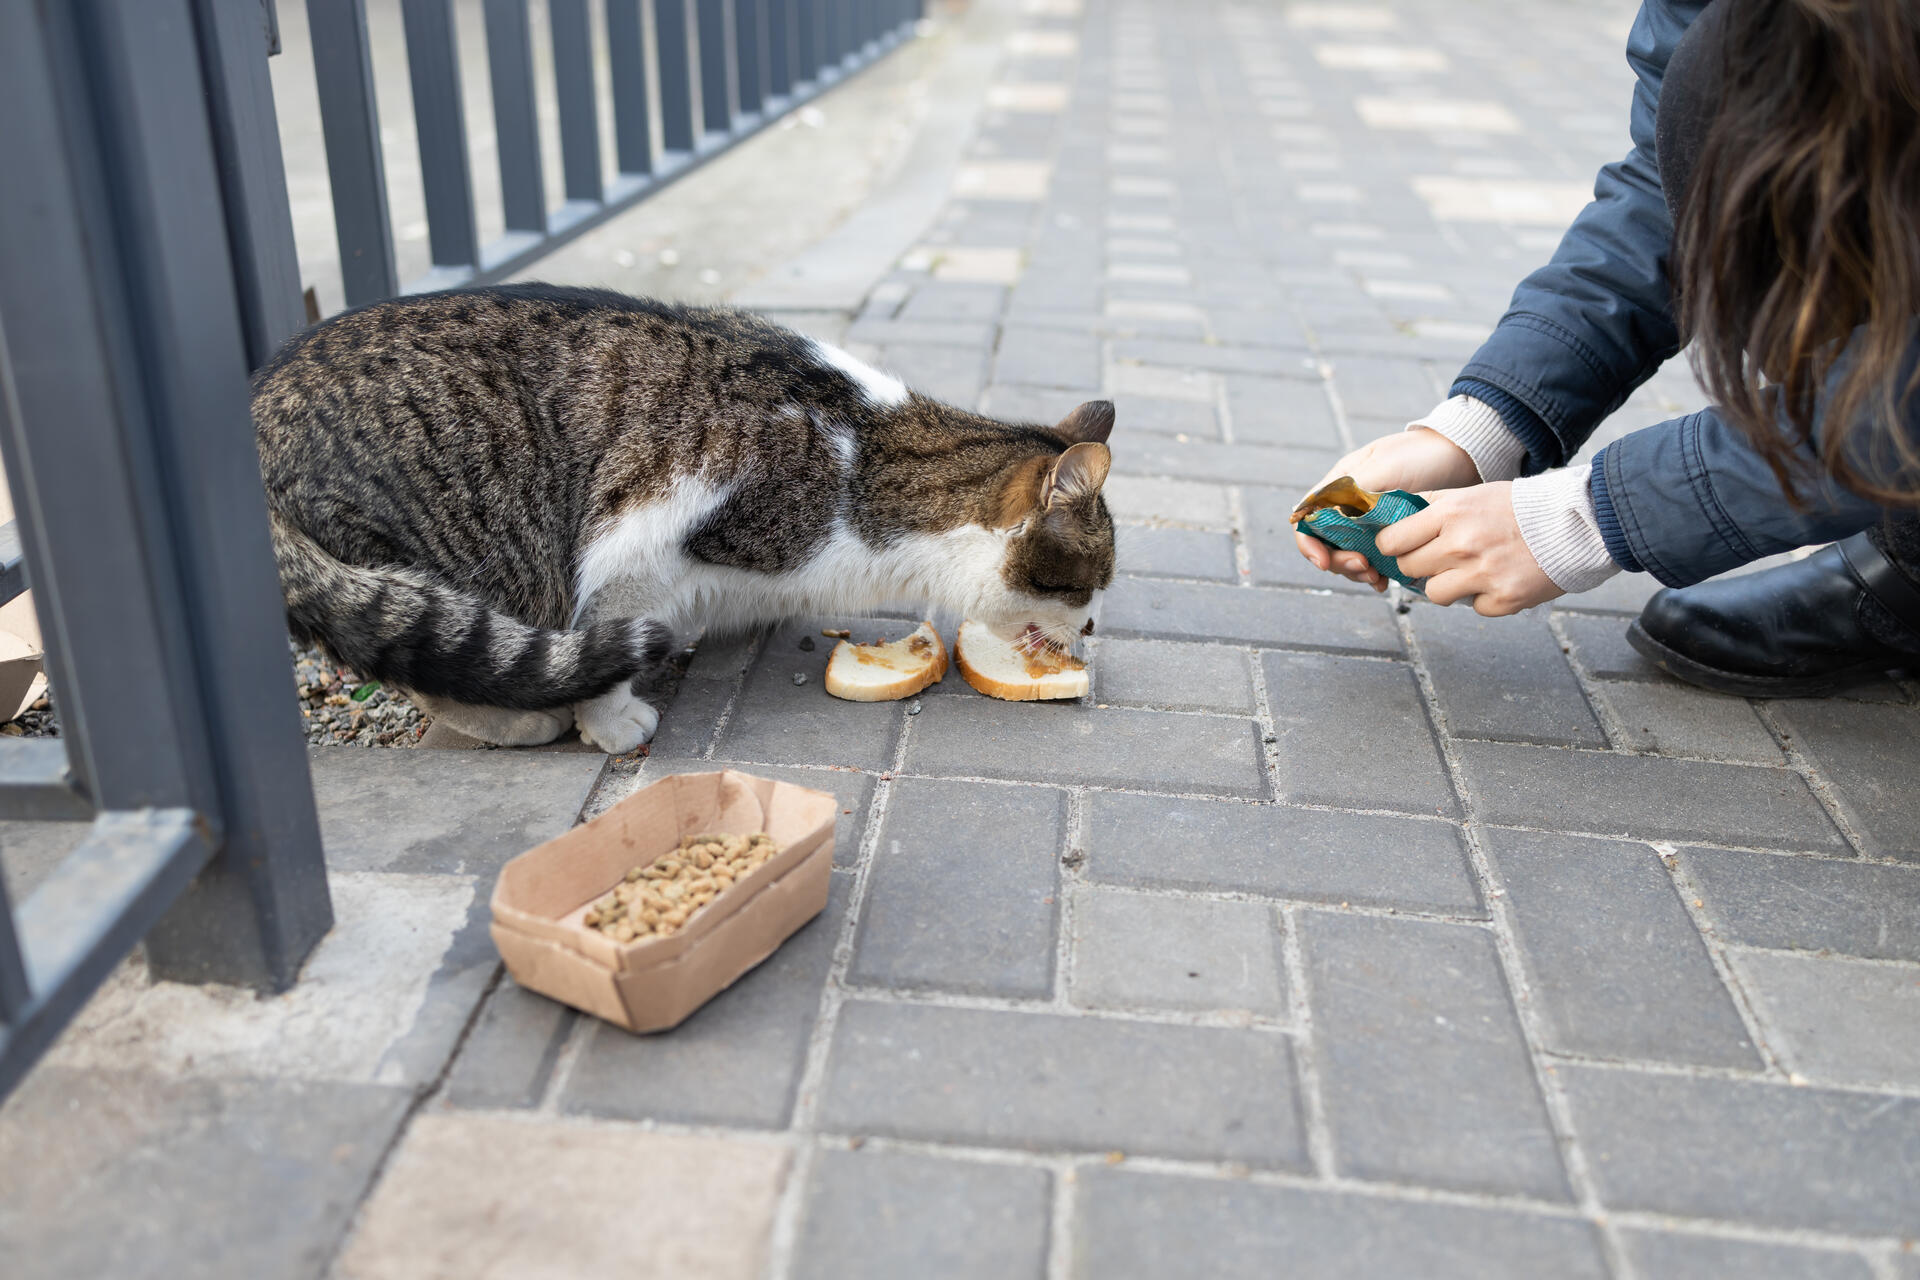 A woman feeding a stray cat on a street